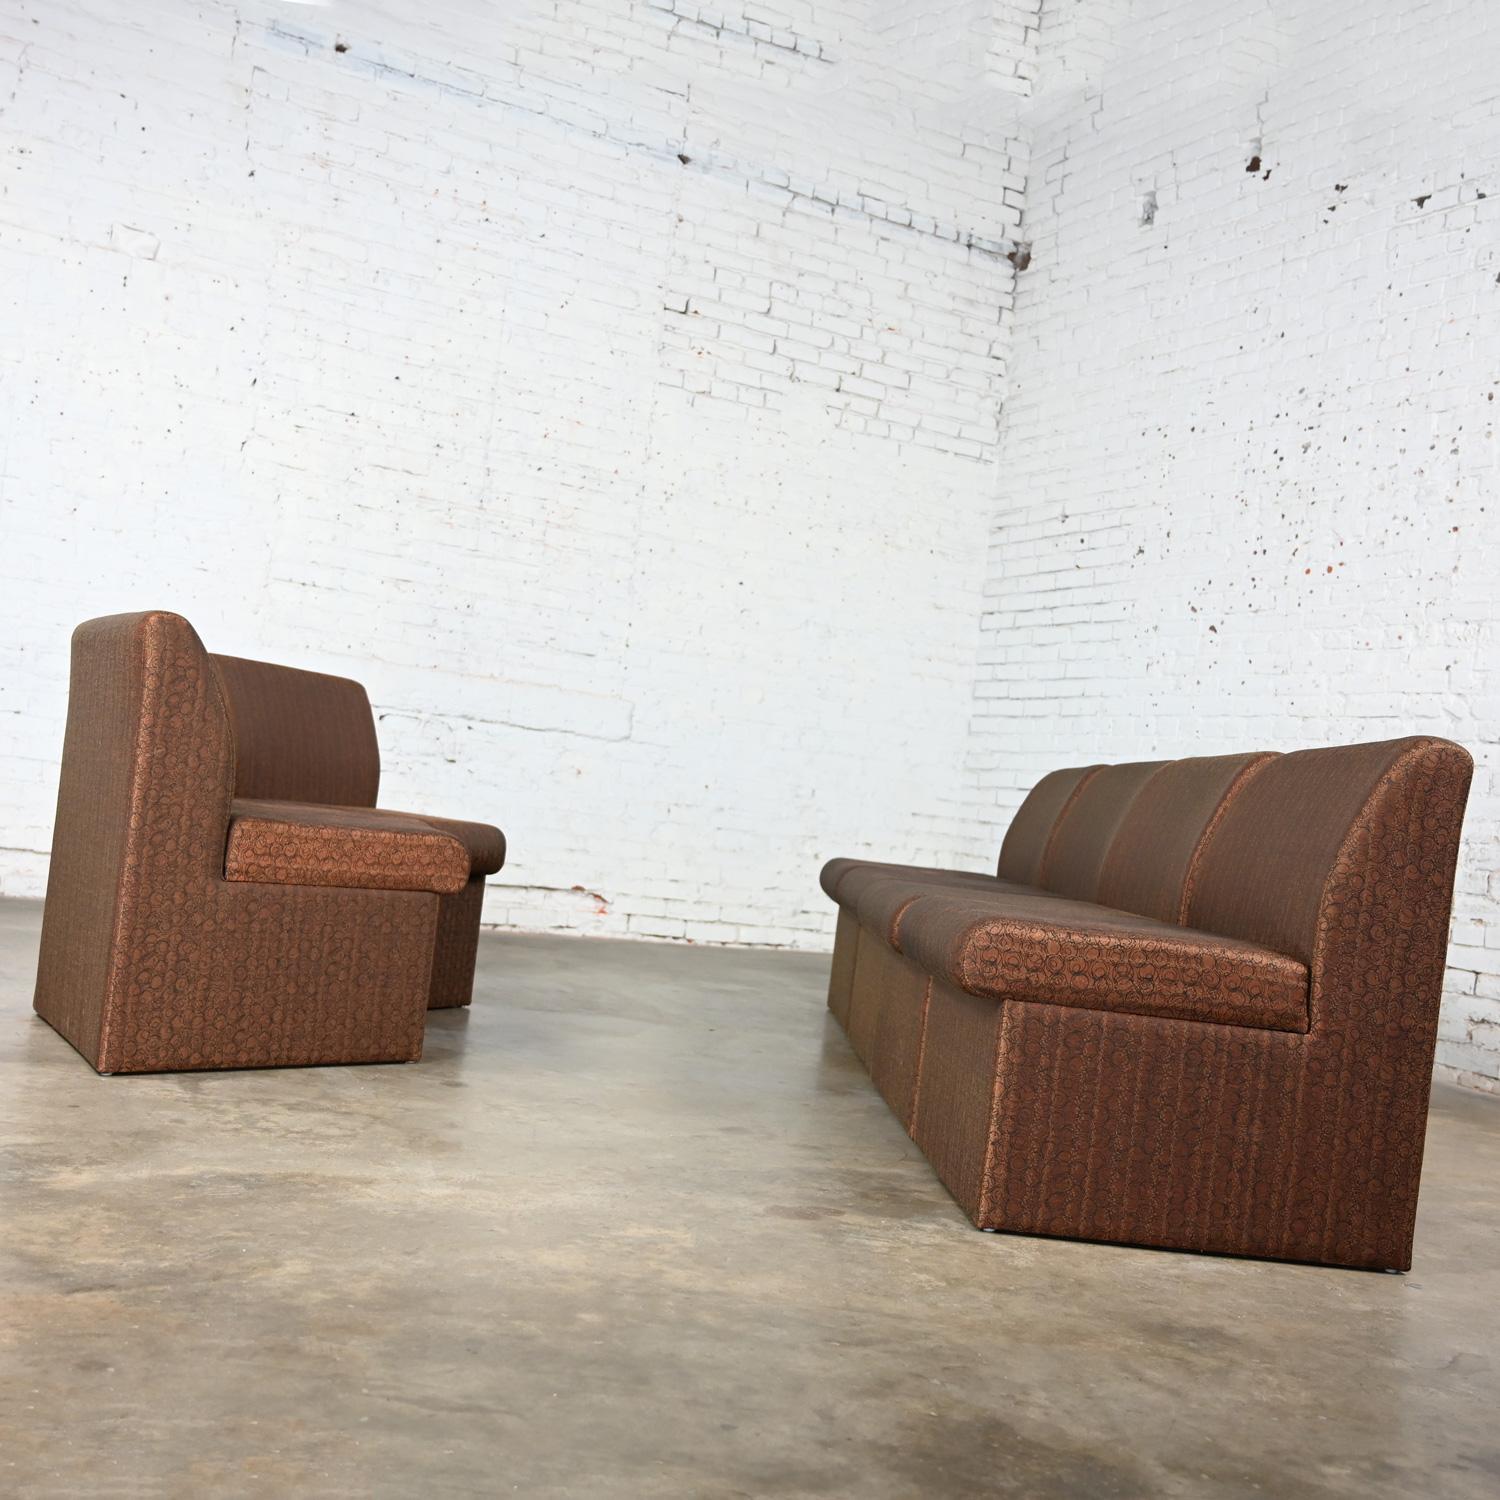 Fin du 20e siècle Modernity Global Upholstery Company Canapé sectionnel 7 pièces Brown en vente 2